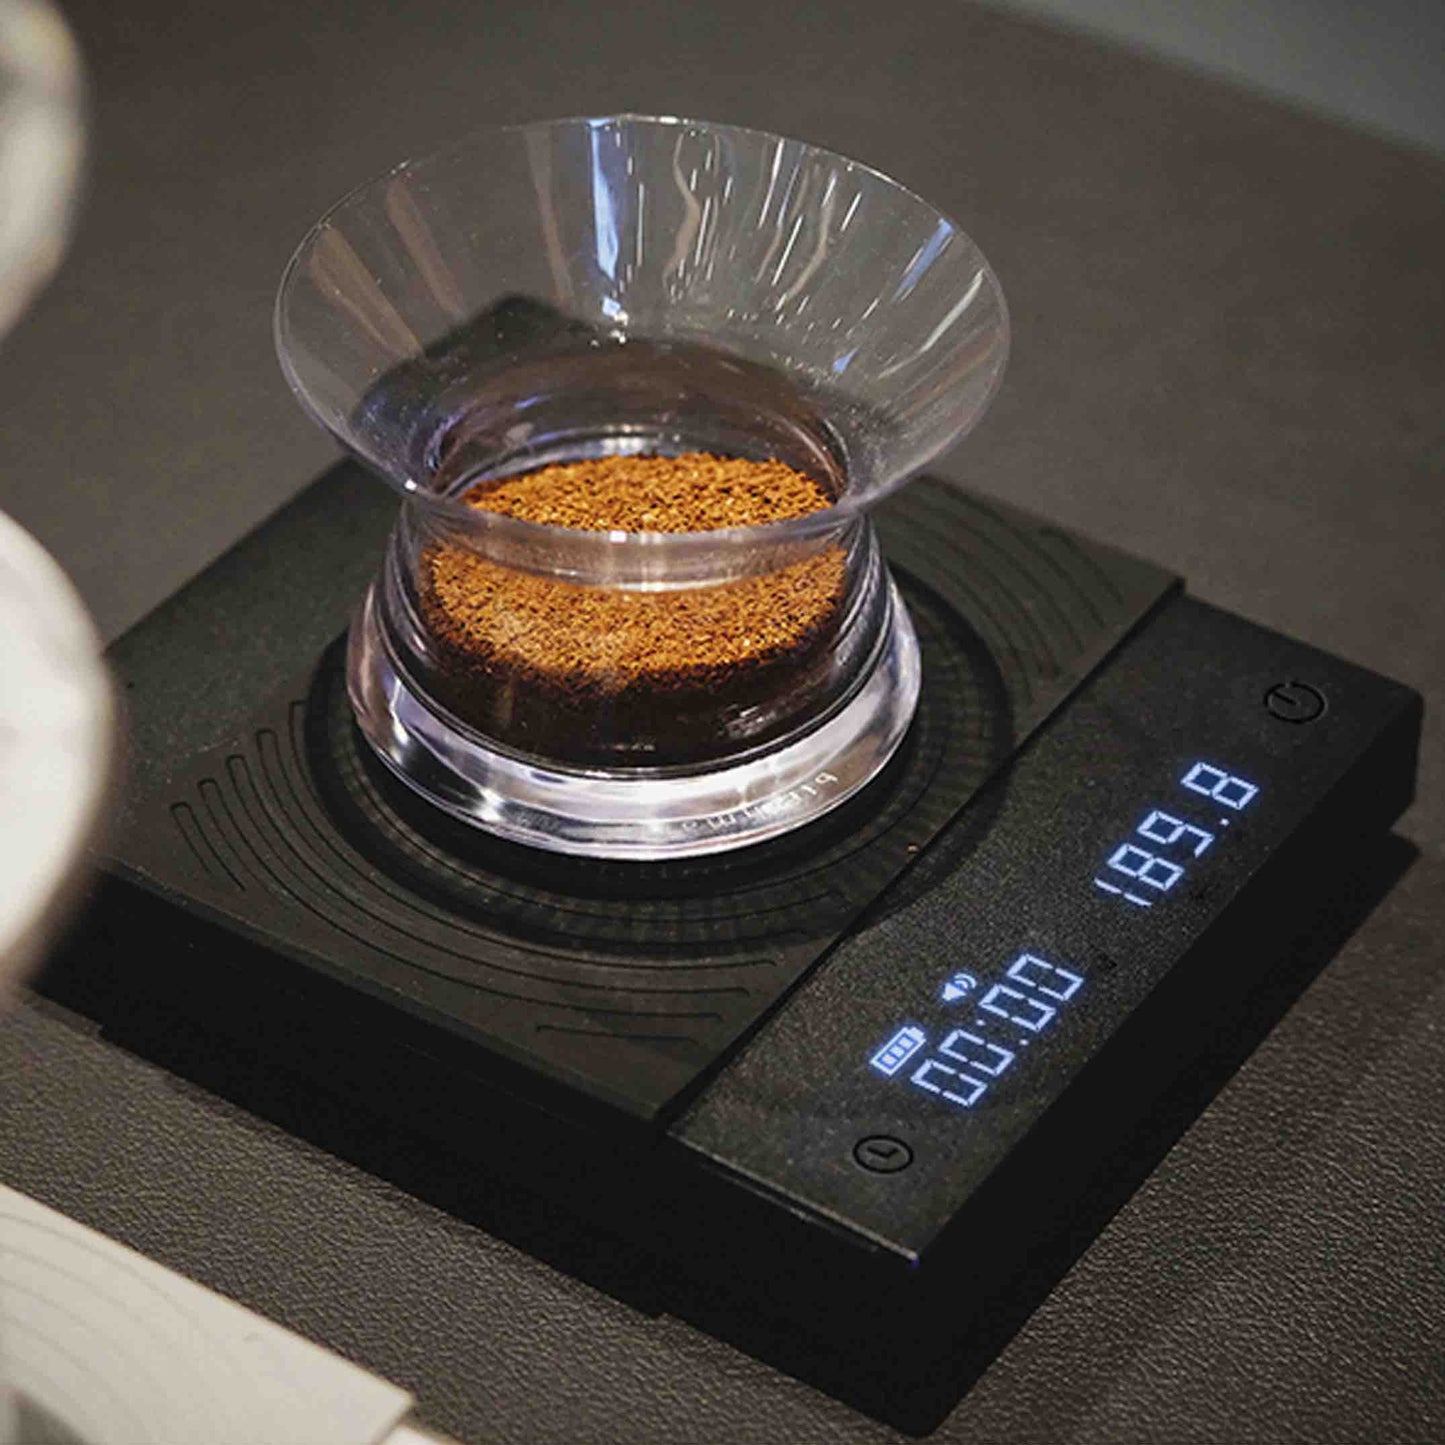 Timemore Black Mirror Basic Plus Coffee Scale Lifestyle 2 2